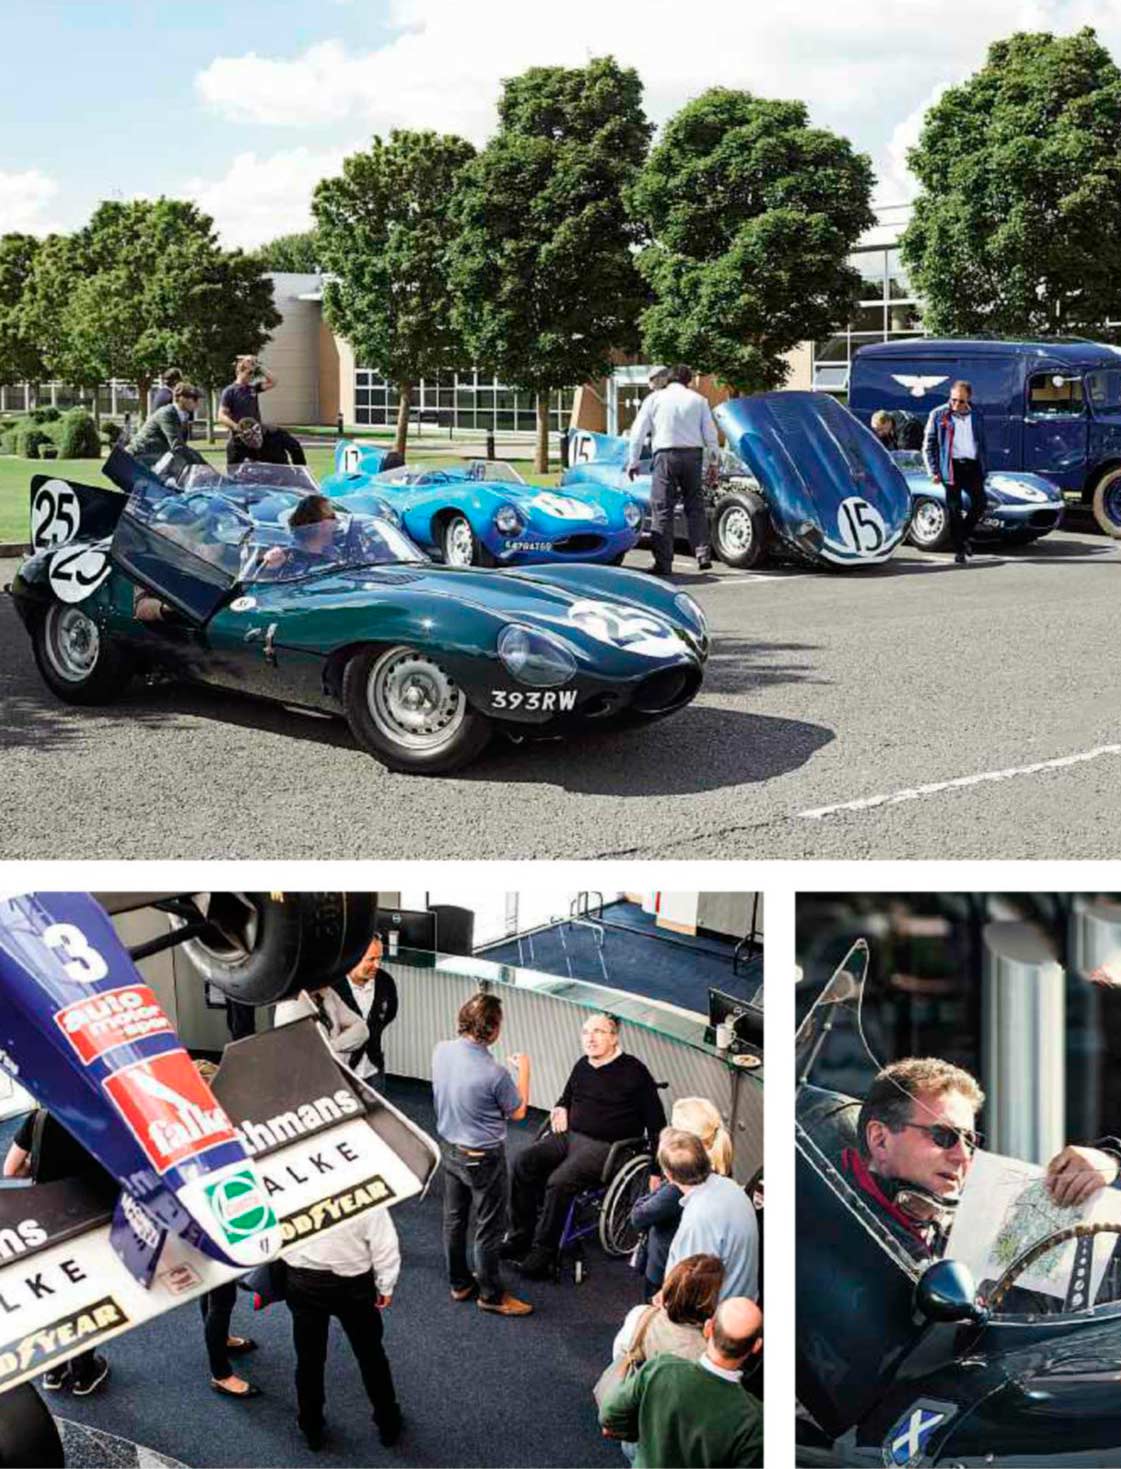 Le Mans 1957 Jaguar D-Types road and track test